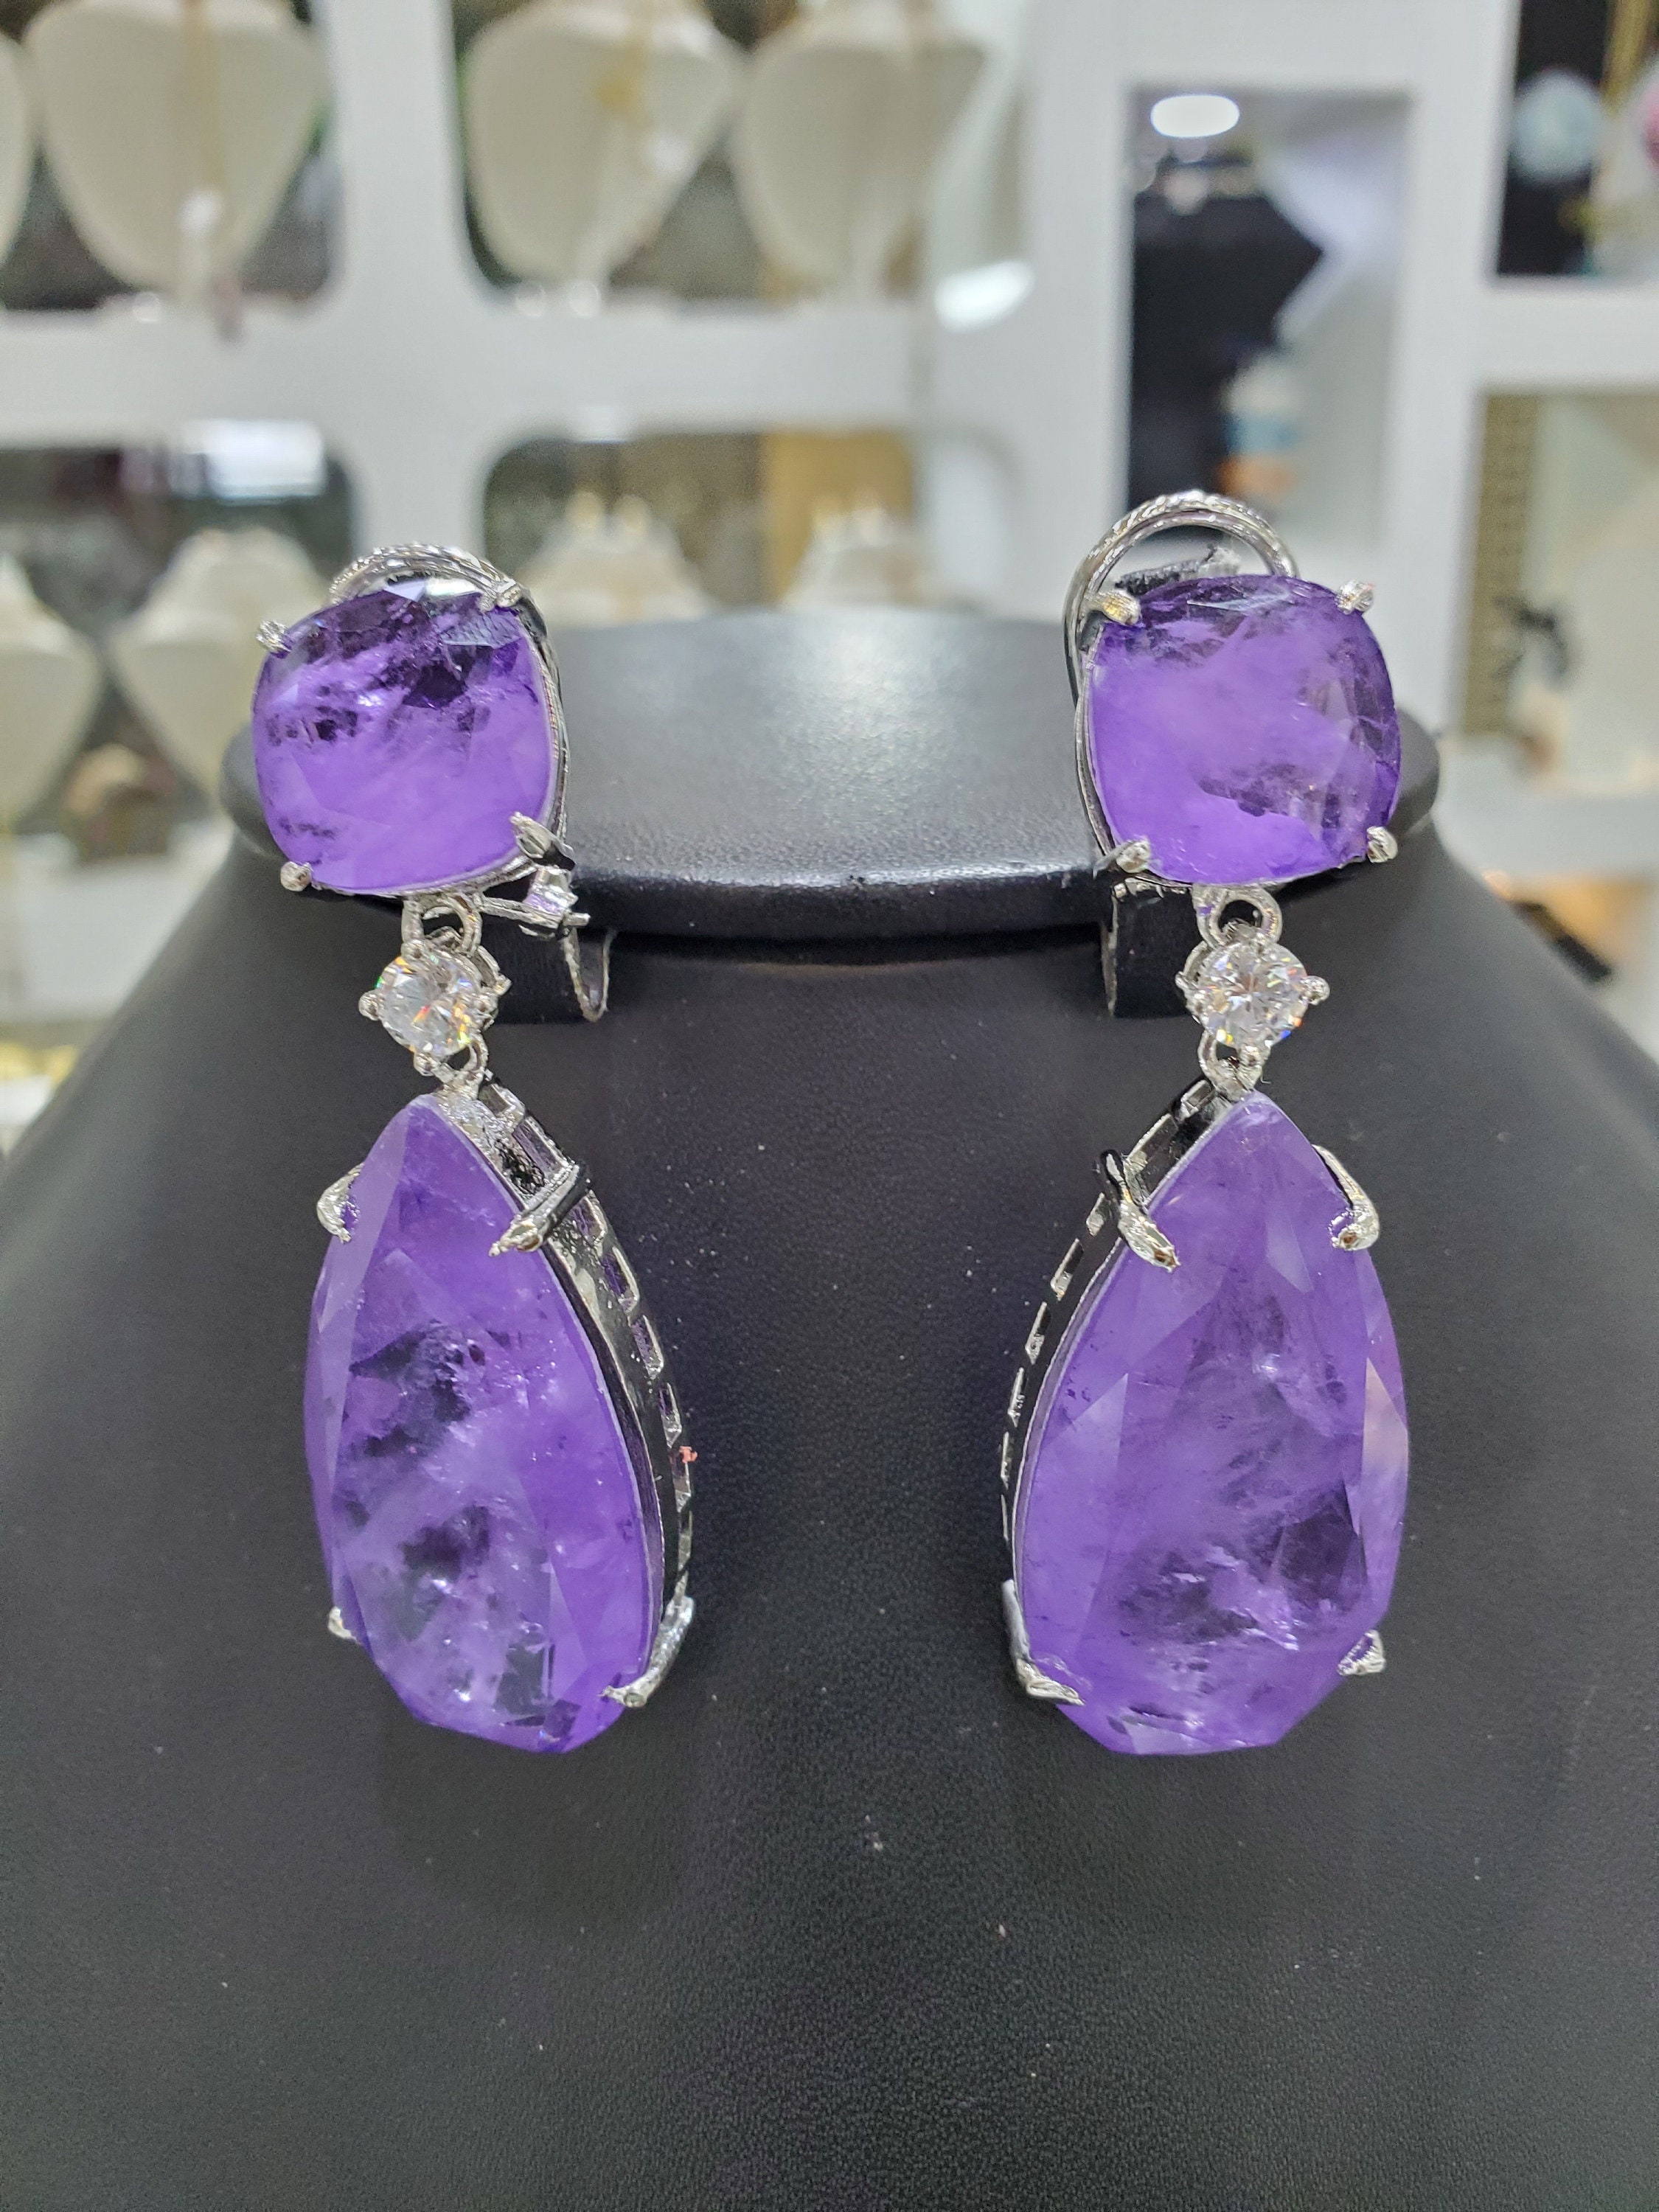 Buy forever new purple earrings in India @ Limeroad